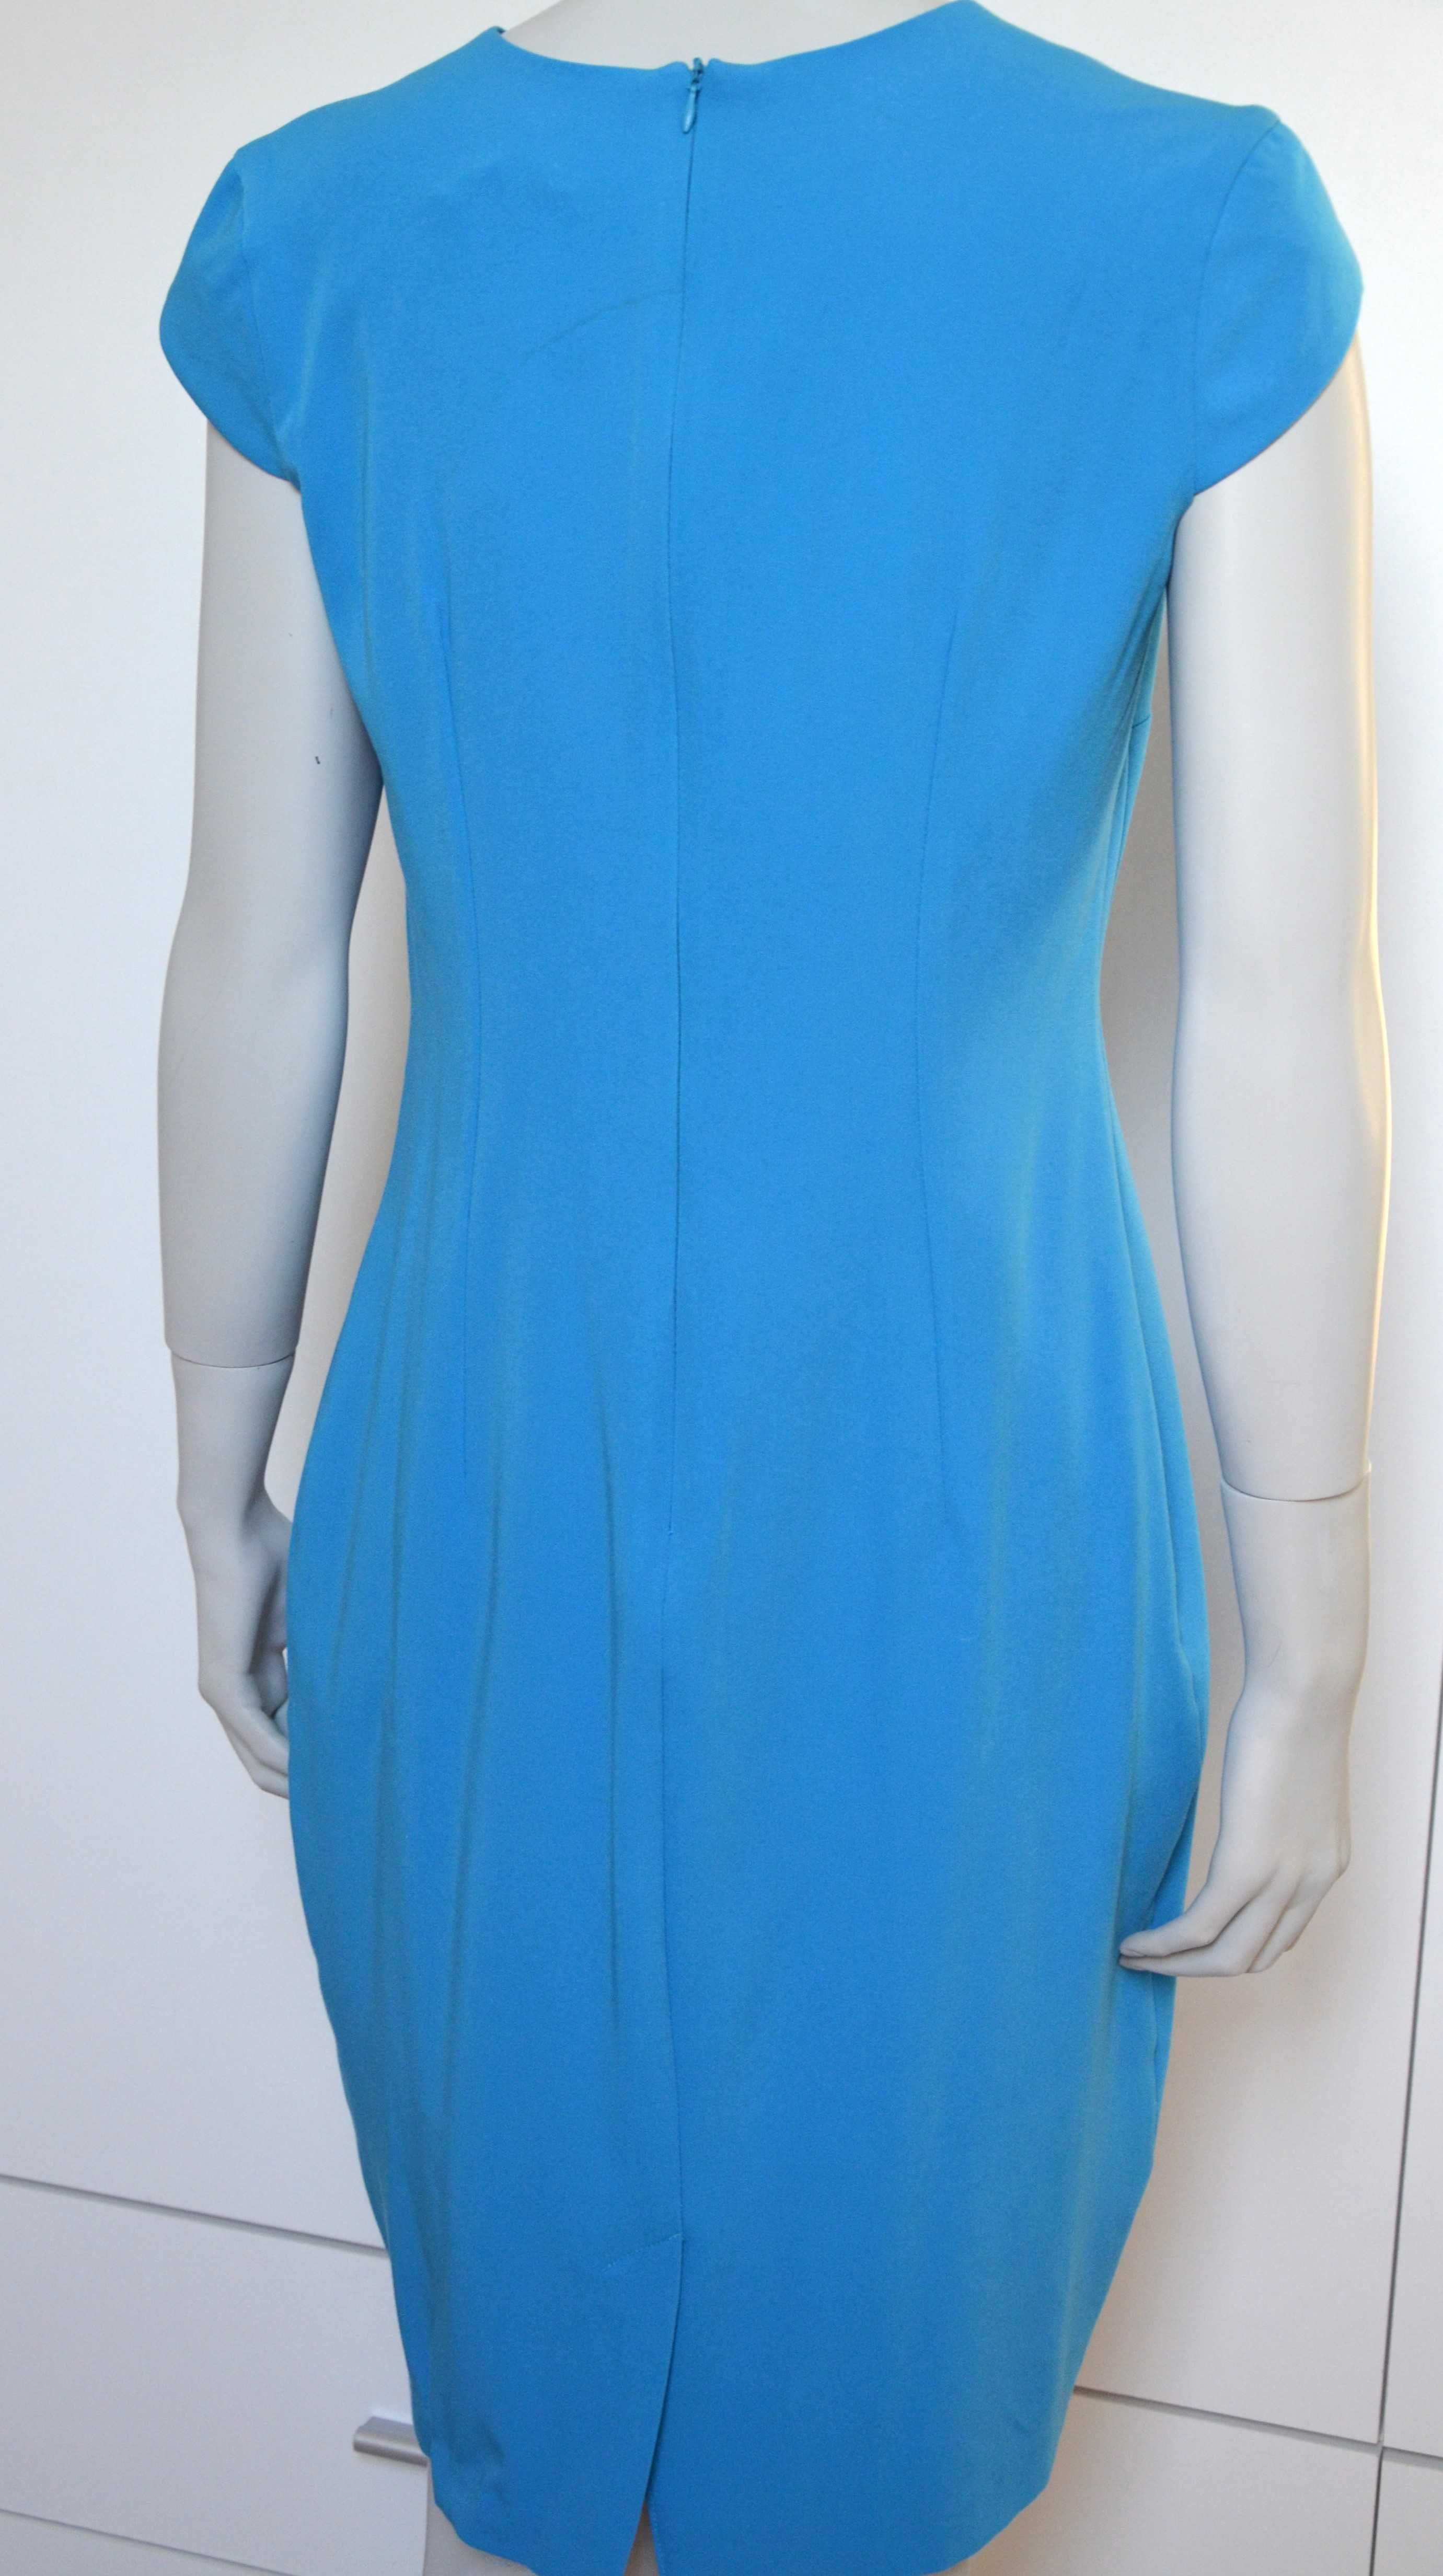 Klasyczna elegancka niebieska sukienka nife r.38